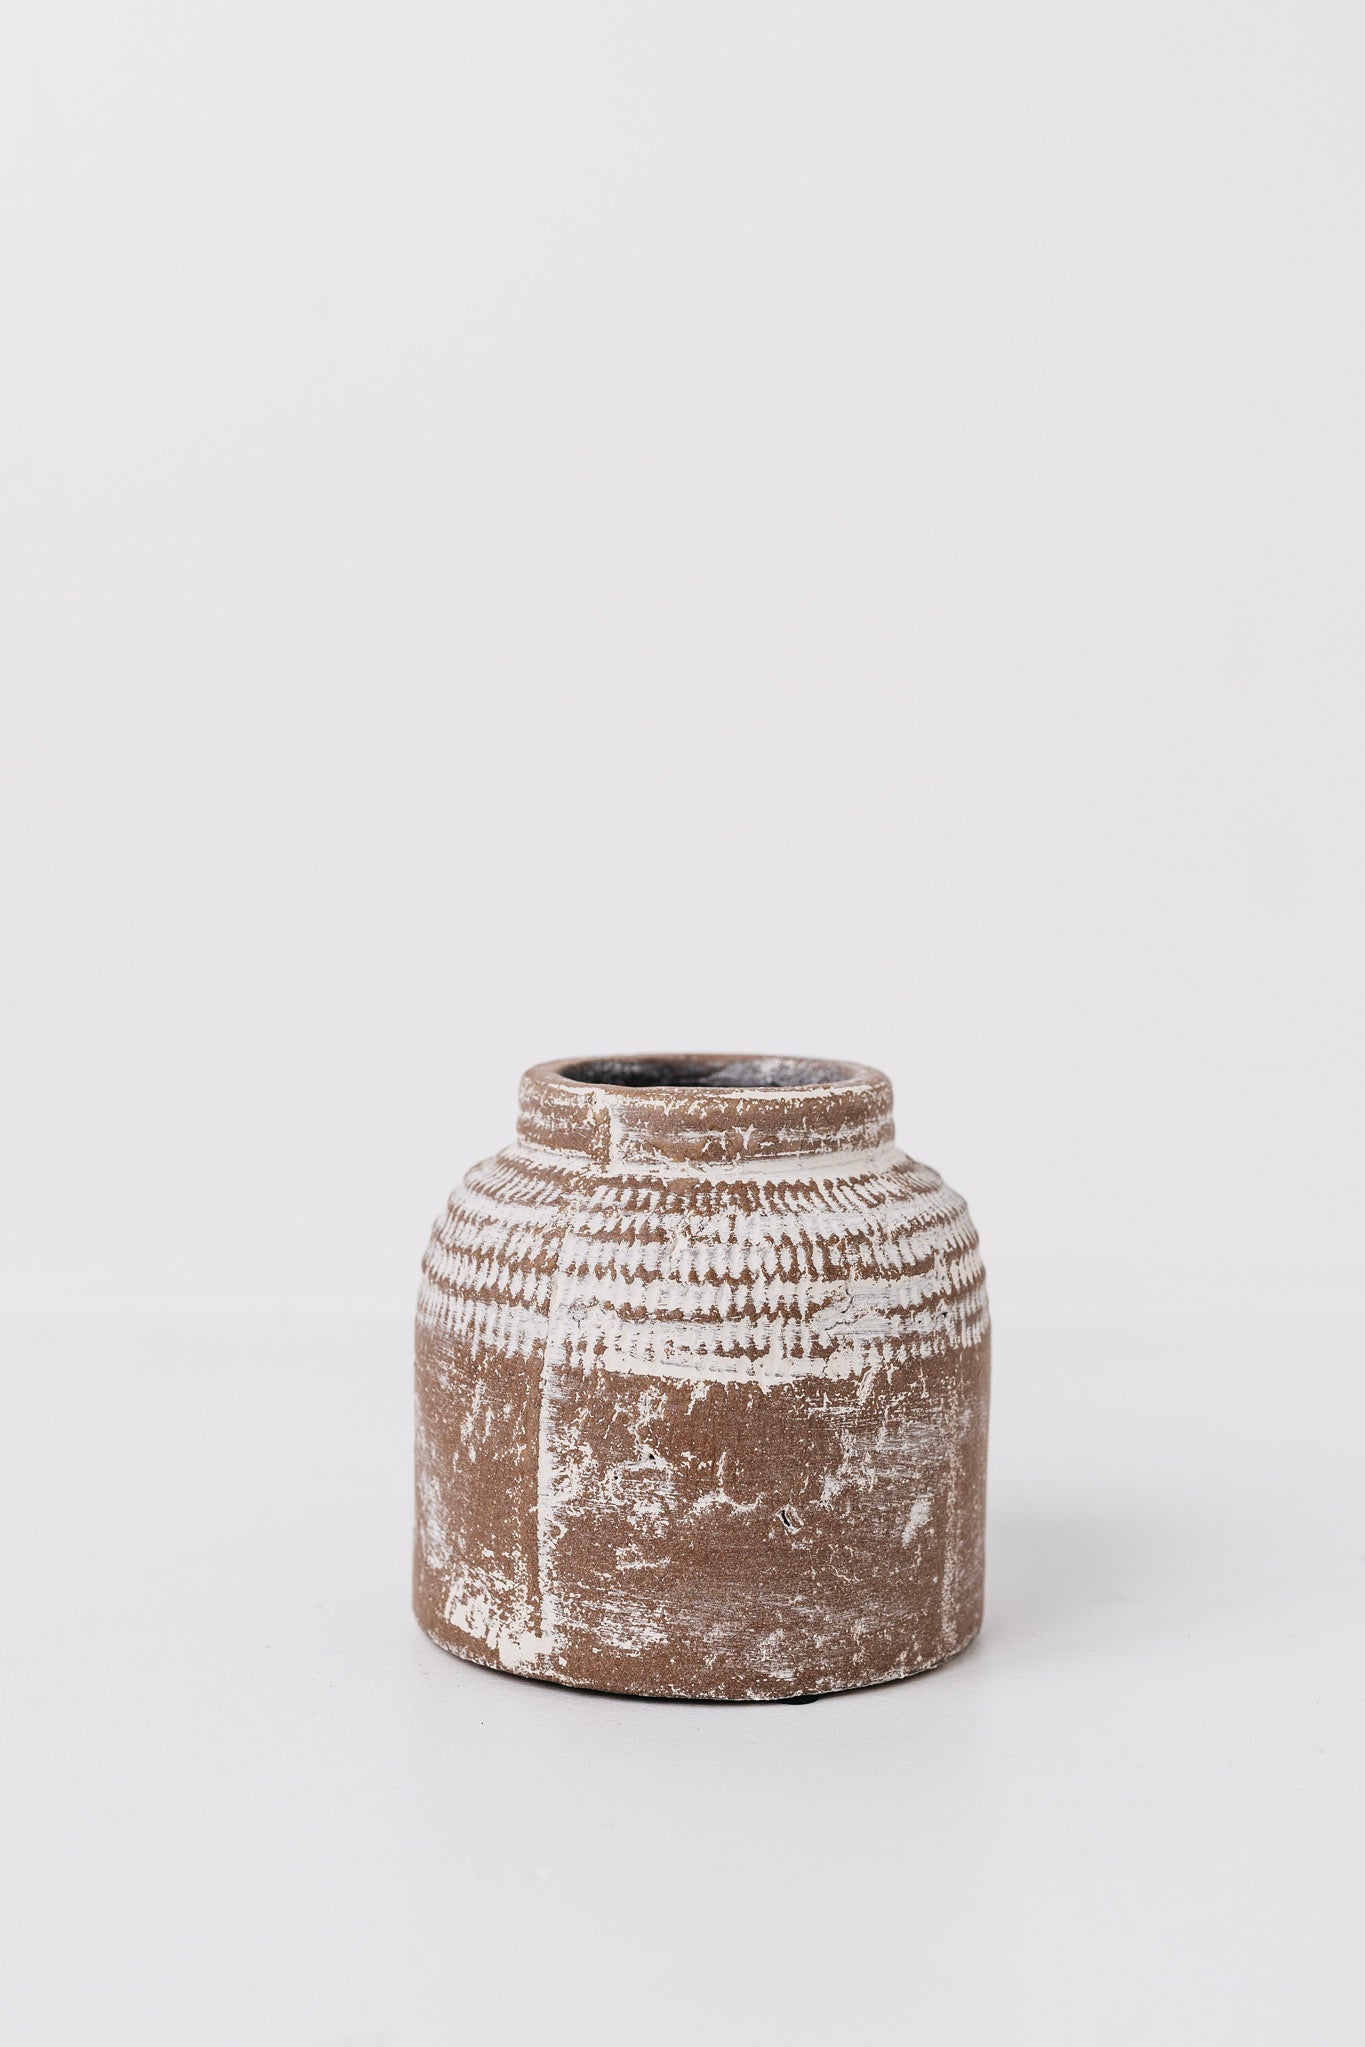 Wheatley Terracotta Pot